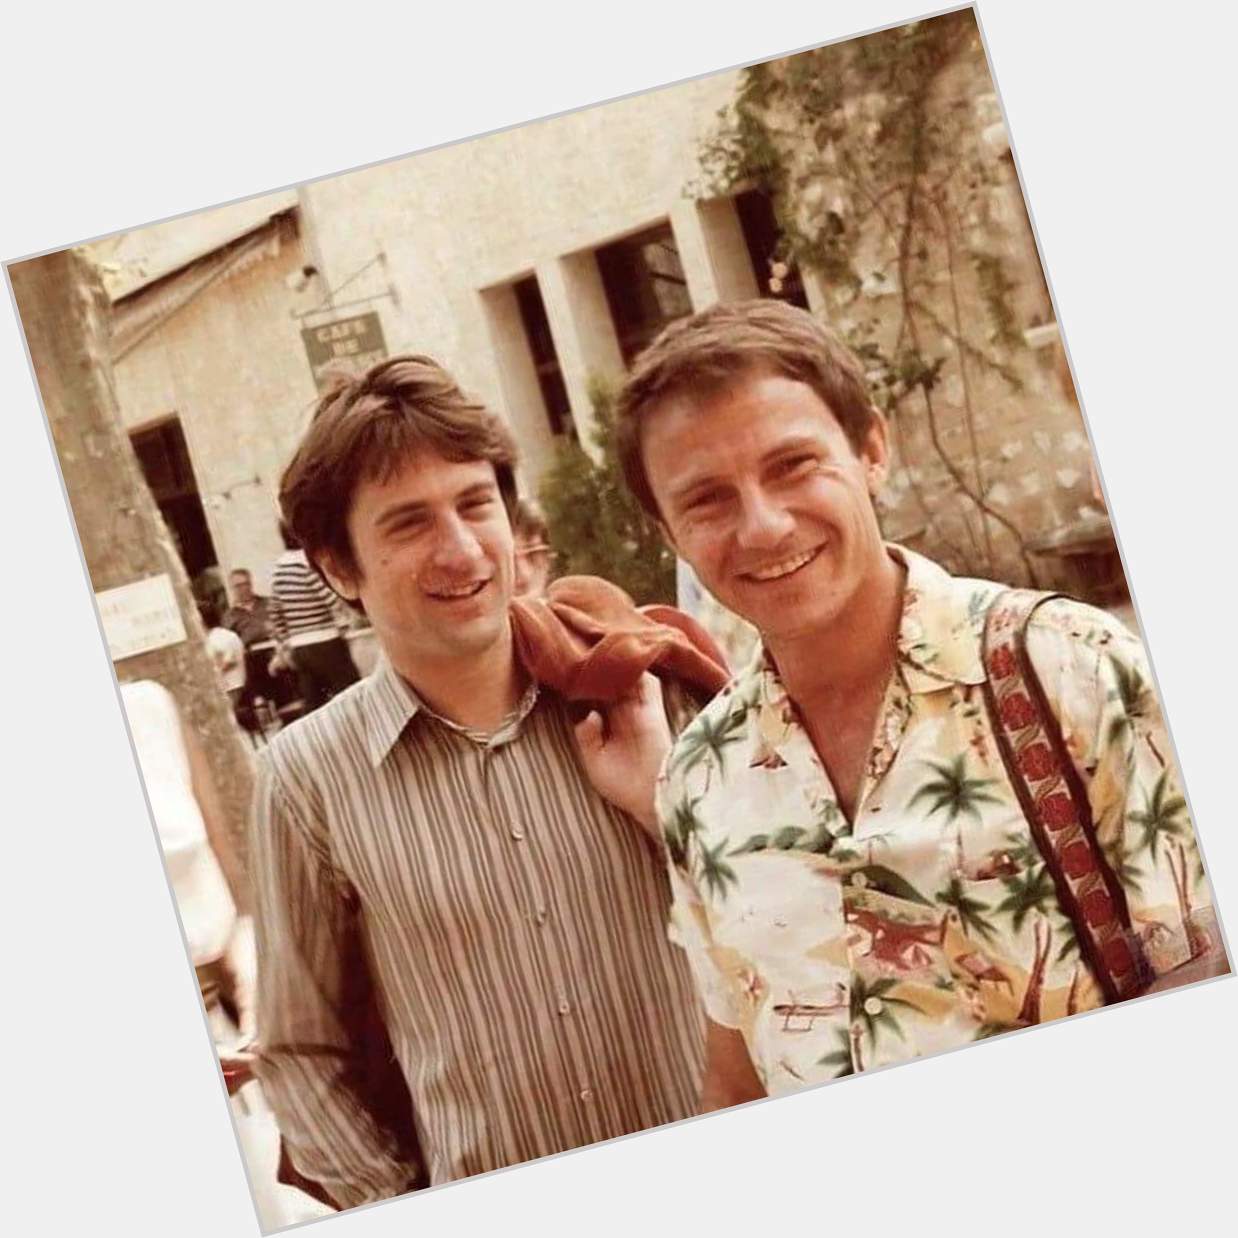 Happy birthday Harvey Keitel - here he is alongside a certain Robert DeNiro at the Cannes Film Festival (1976) 